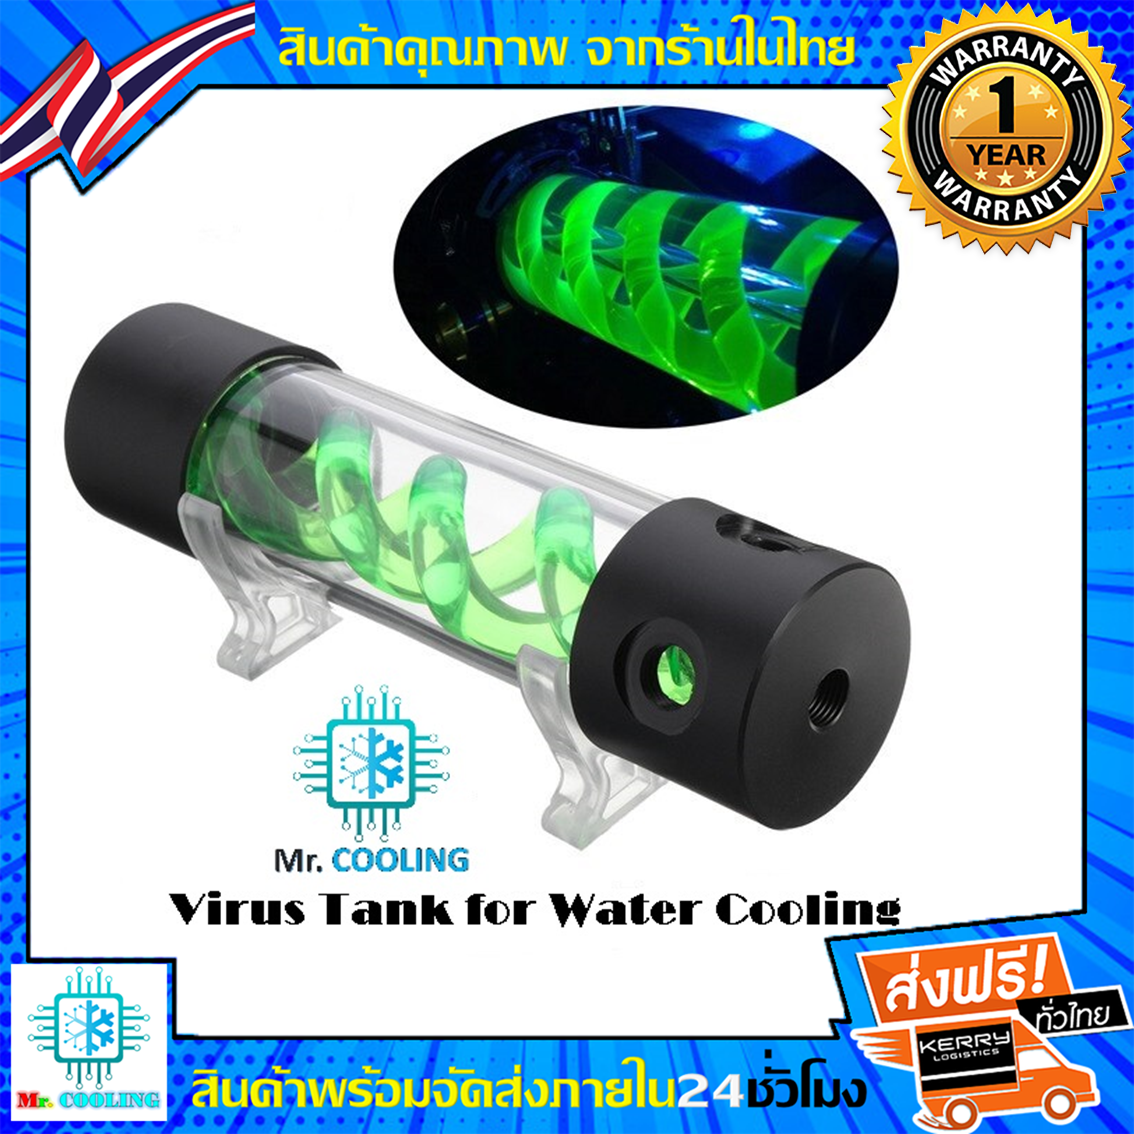 Virus Tank for Water Cooling, ถังพักน้ำ สำหรับ ชุดน้ำ ระบบเปิด มีเกลียวไวรัส, Green, สีเขียว